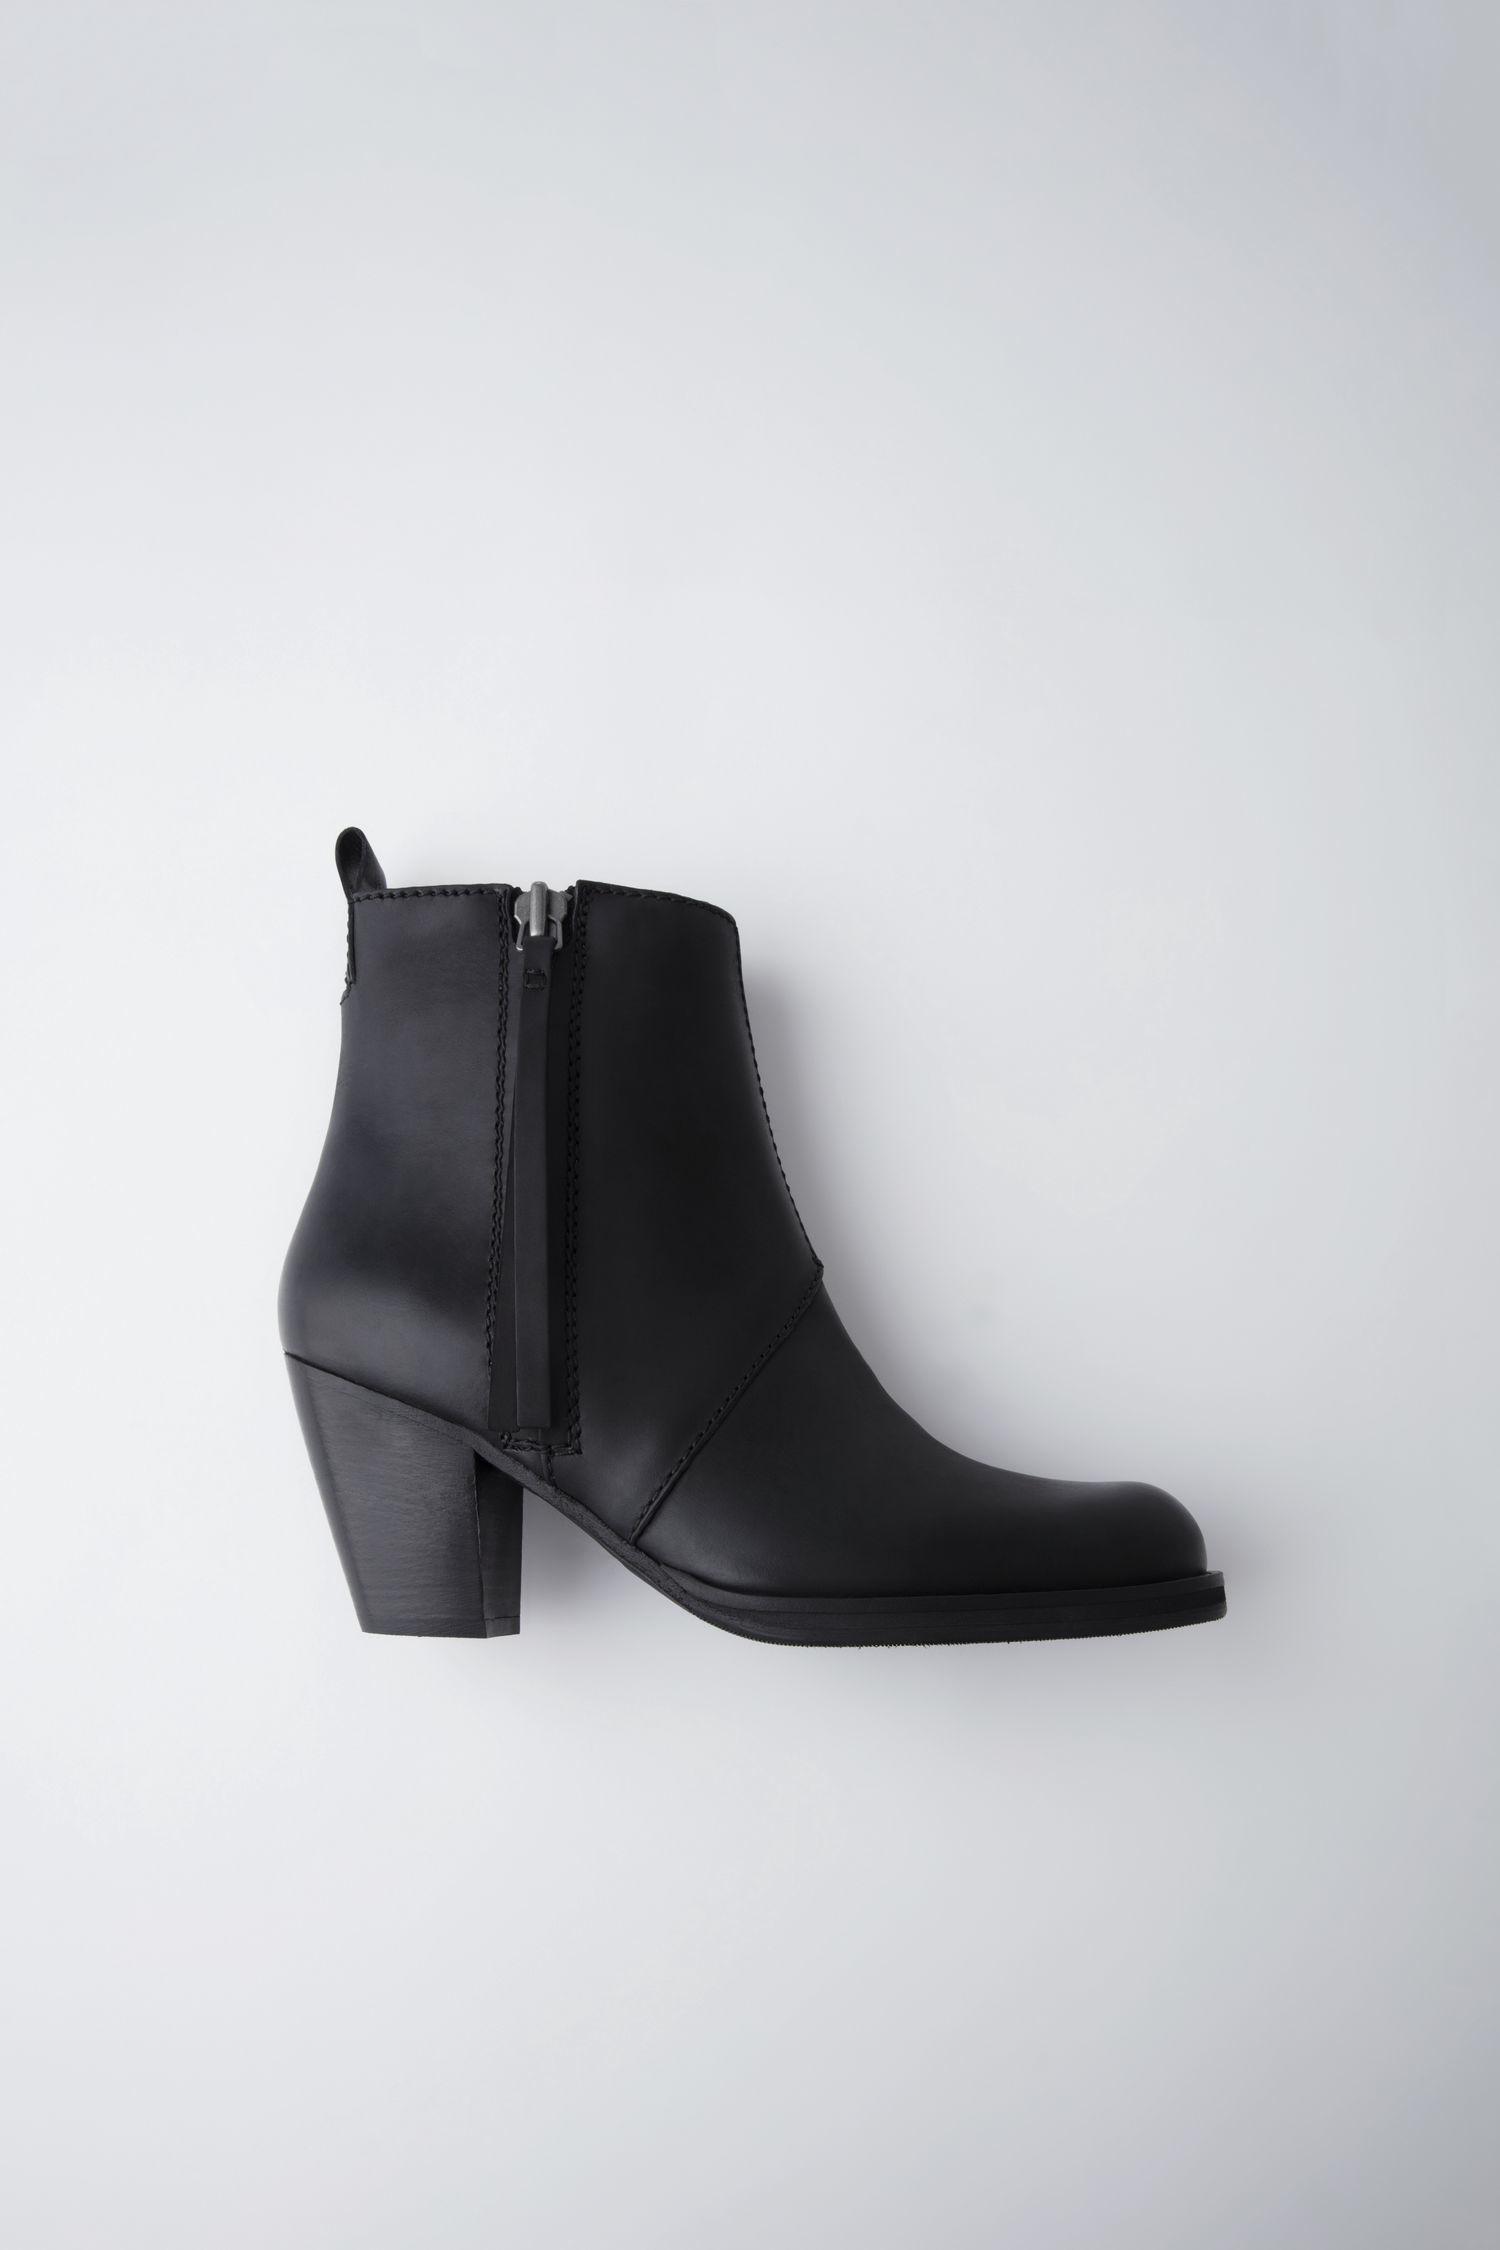 Acne Studios Sh Black Boots | Lyst